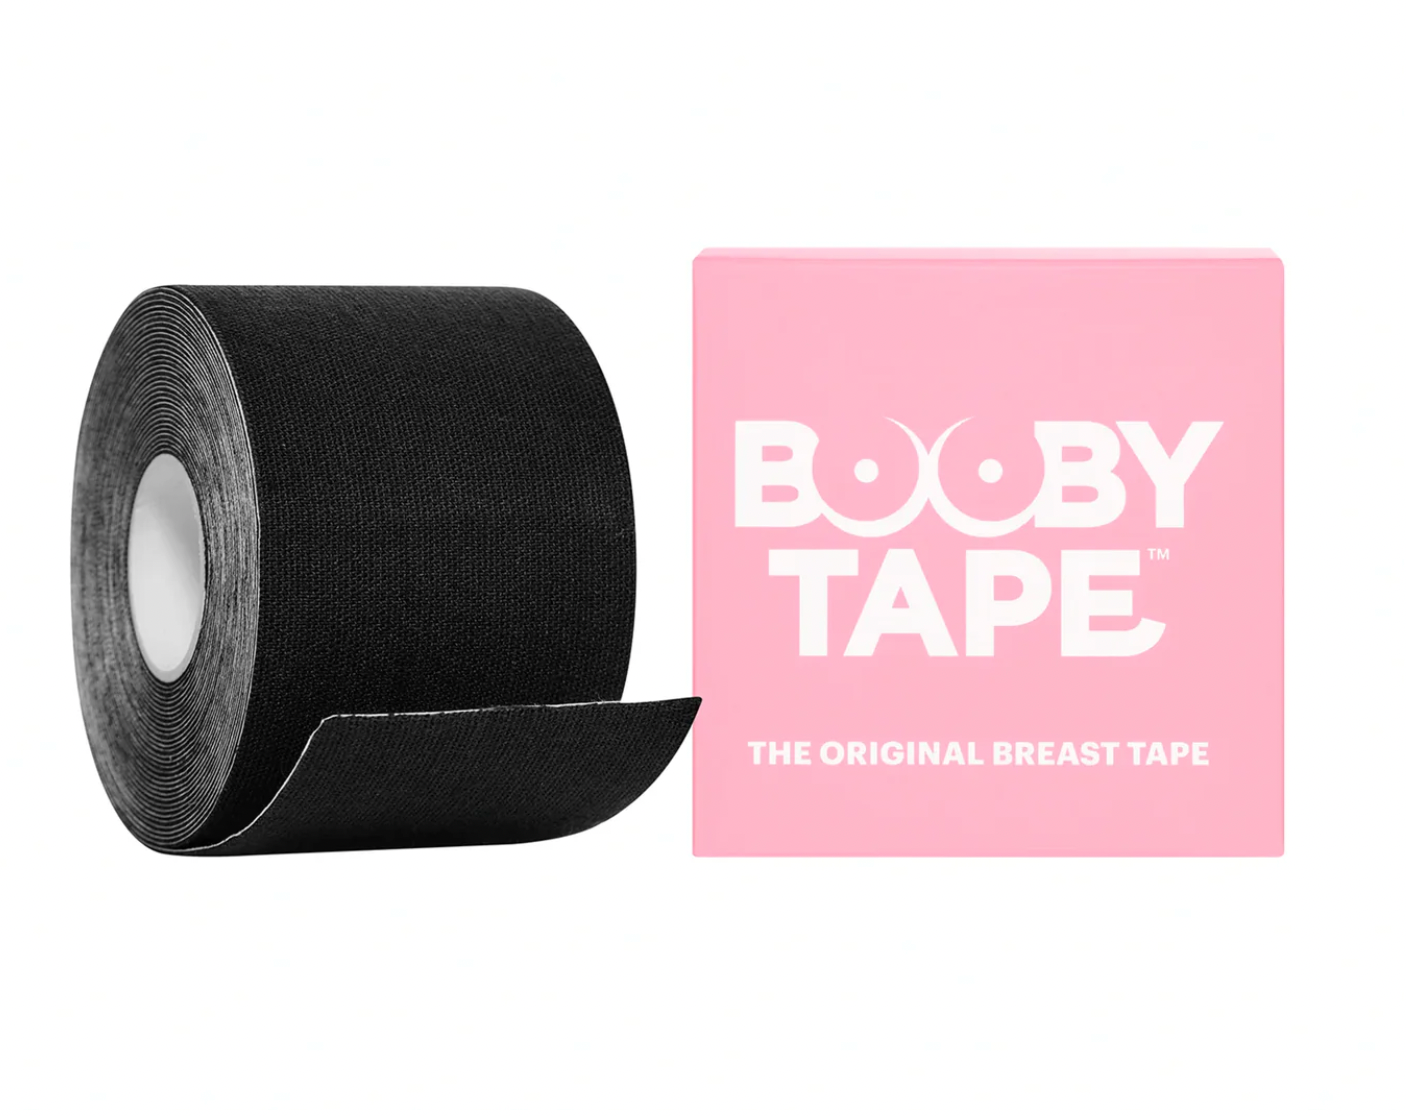 Breast Tape